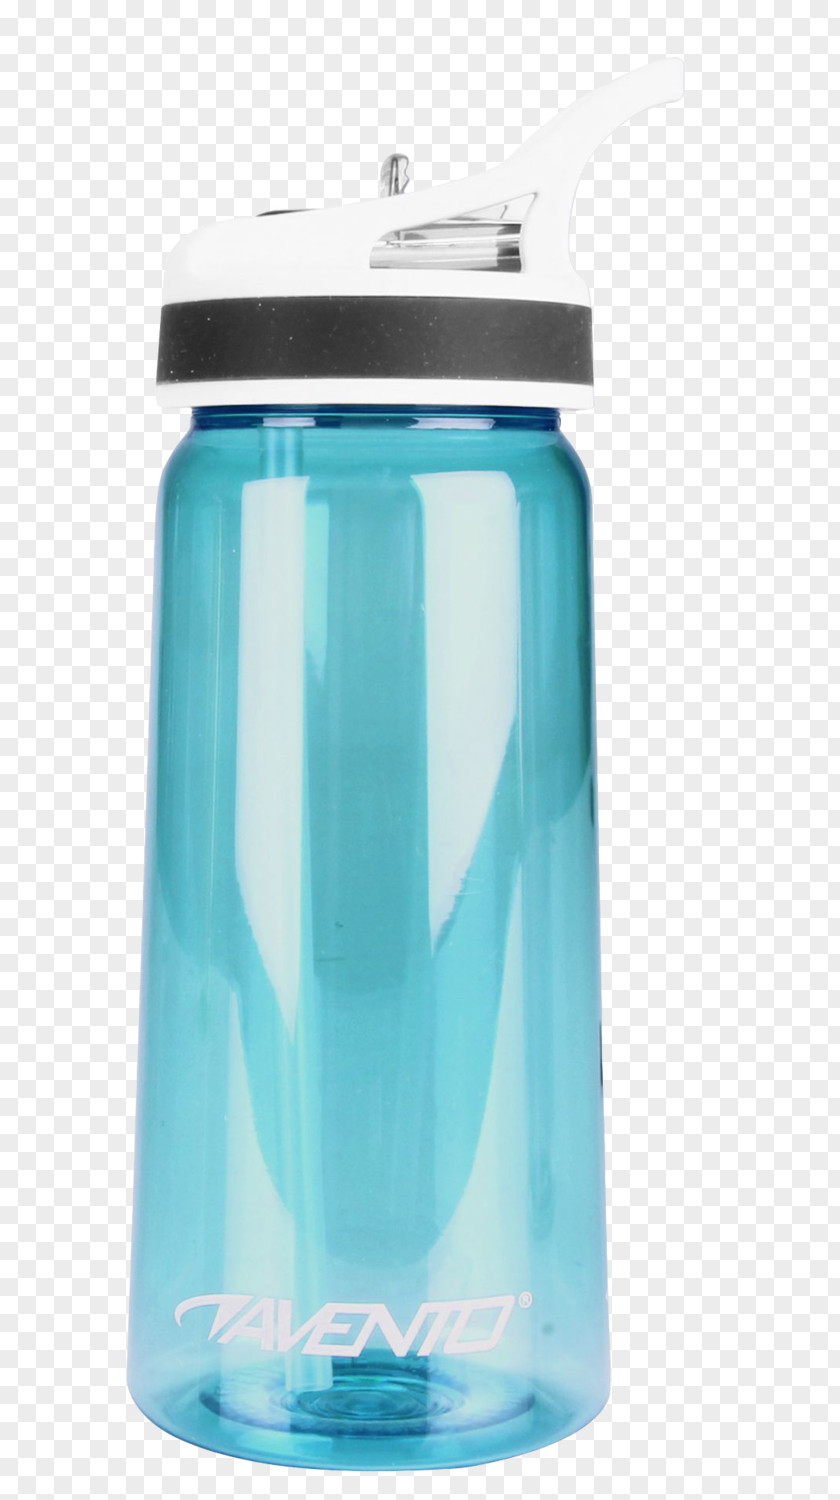 Bottle Water Bottles Glass Plastic Blue PNG